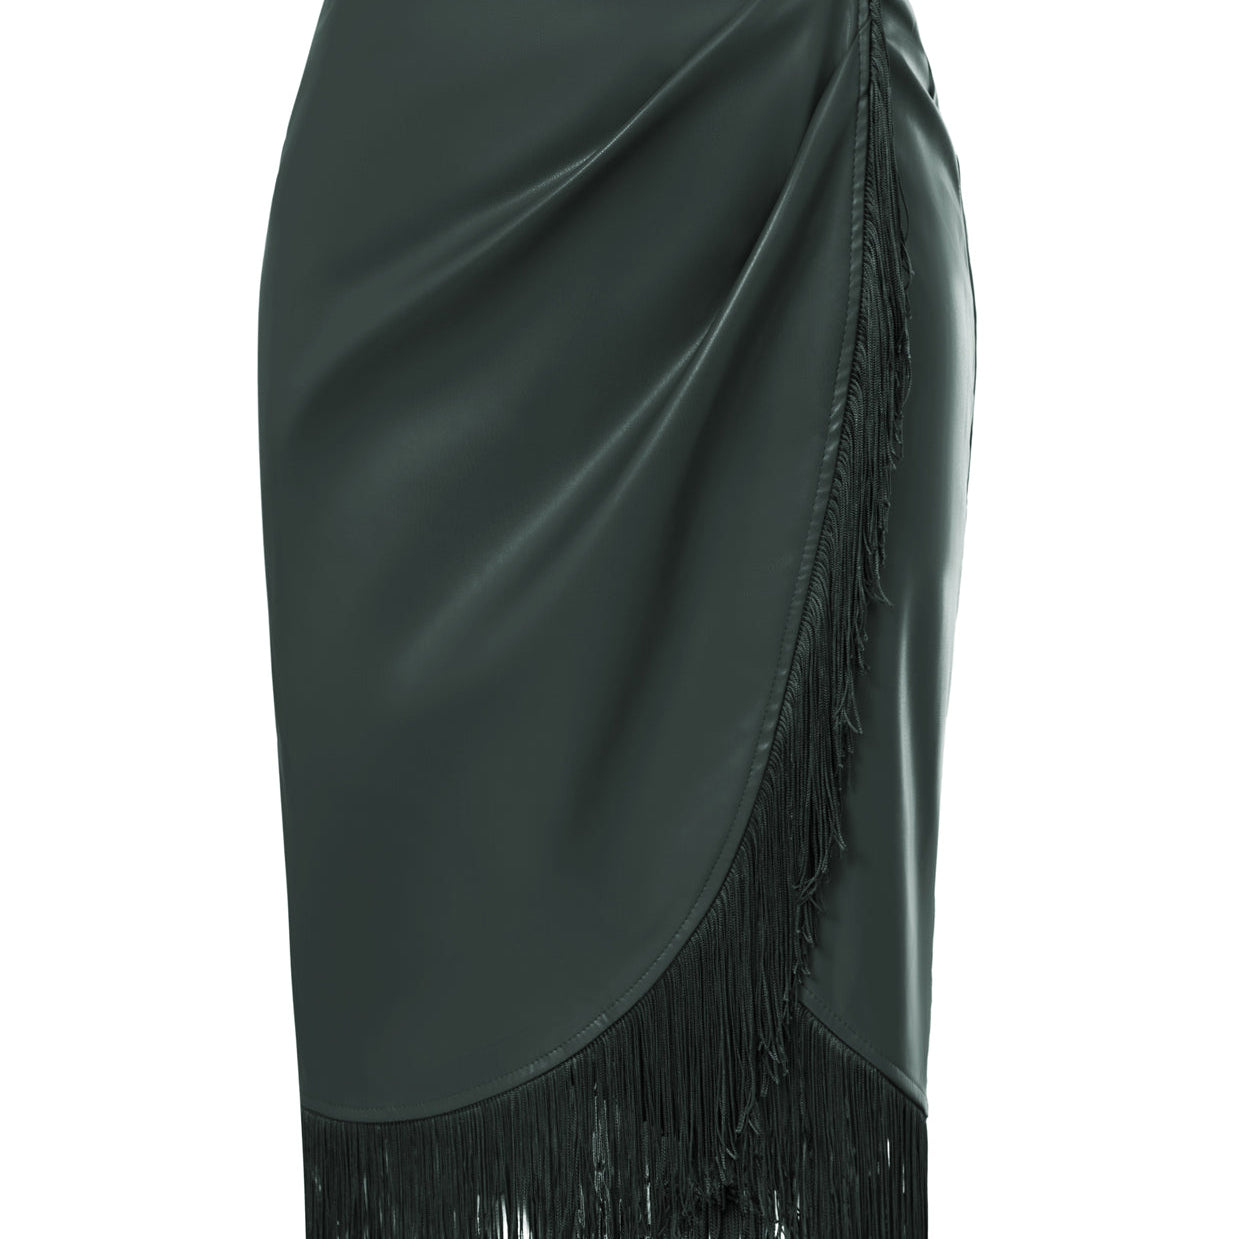 Fringe Bodycon Leather Skirt with Slit Knee Length Pencil Skirt